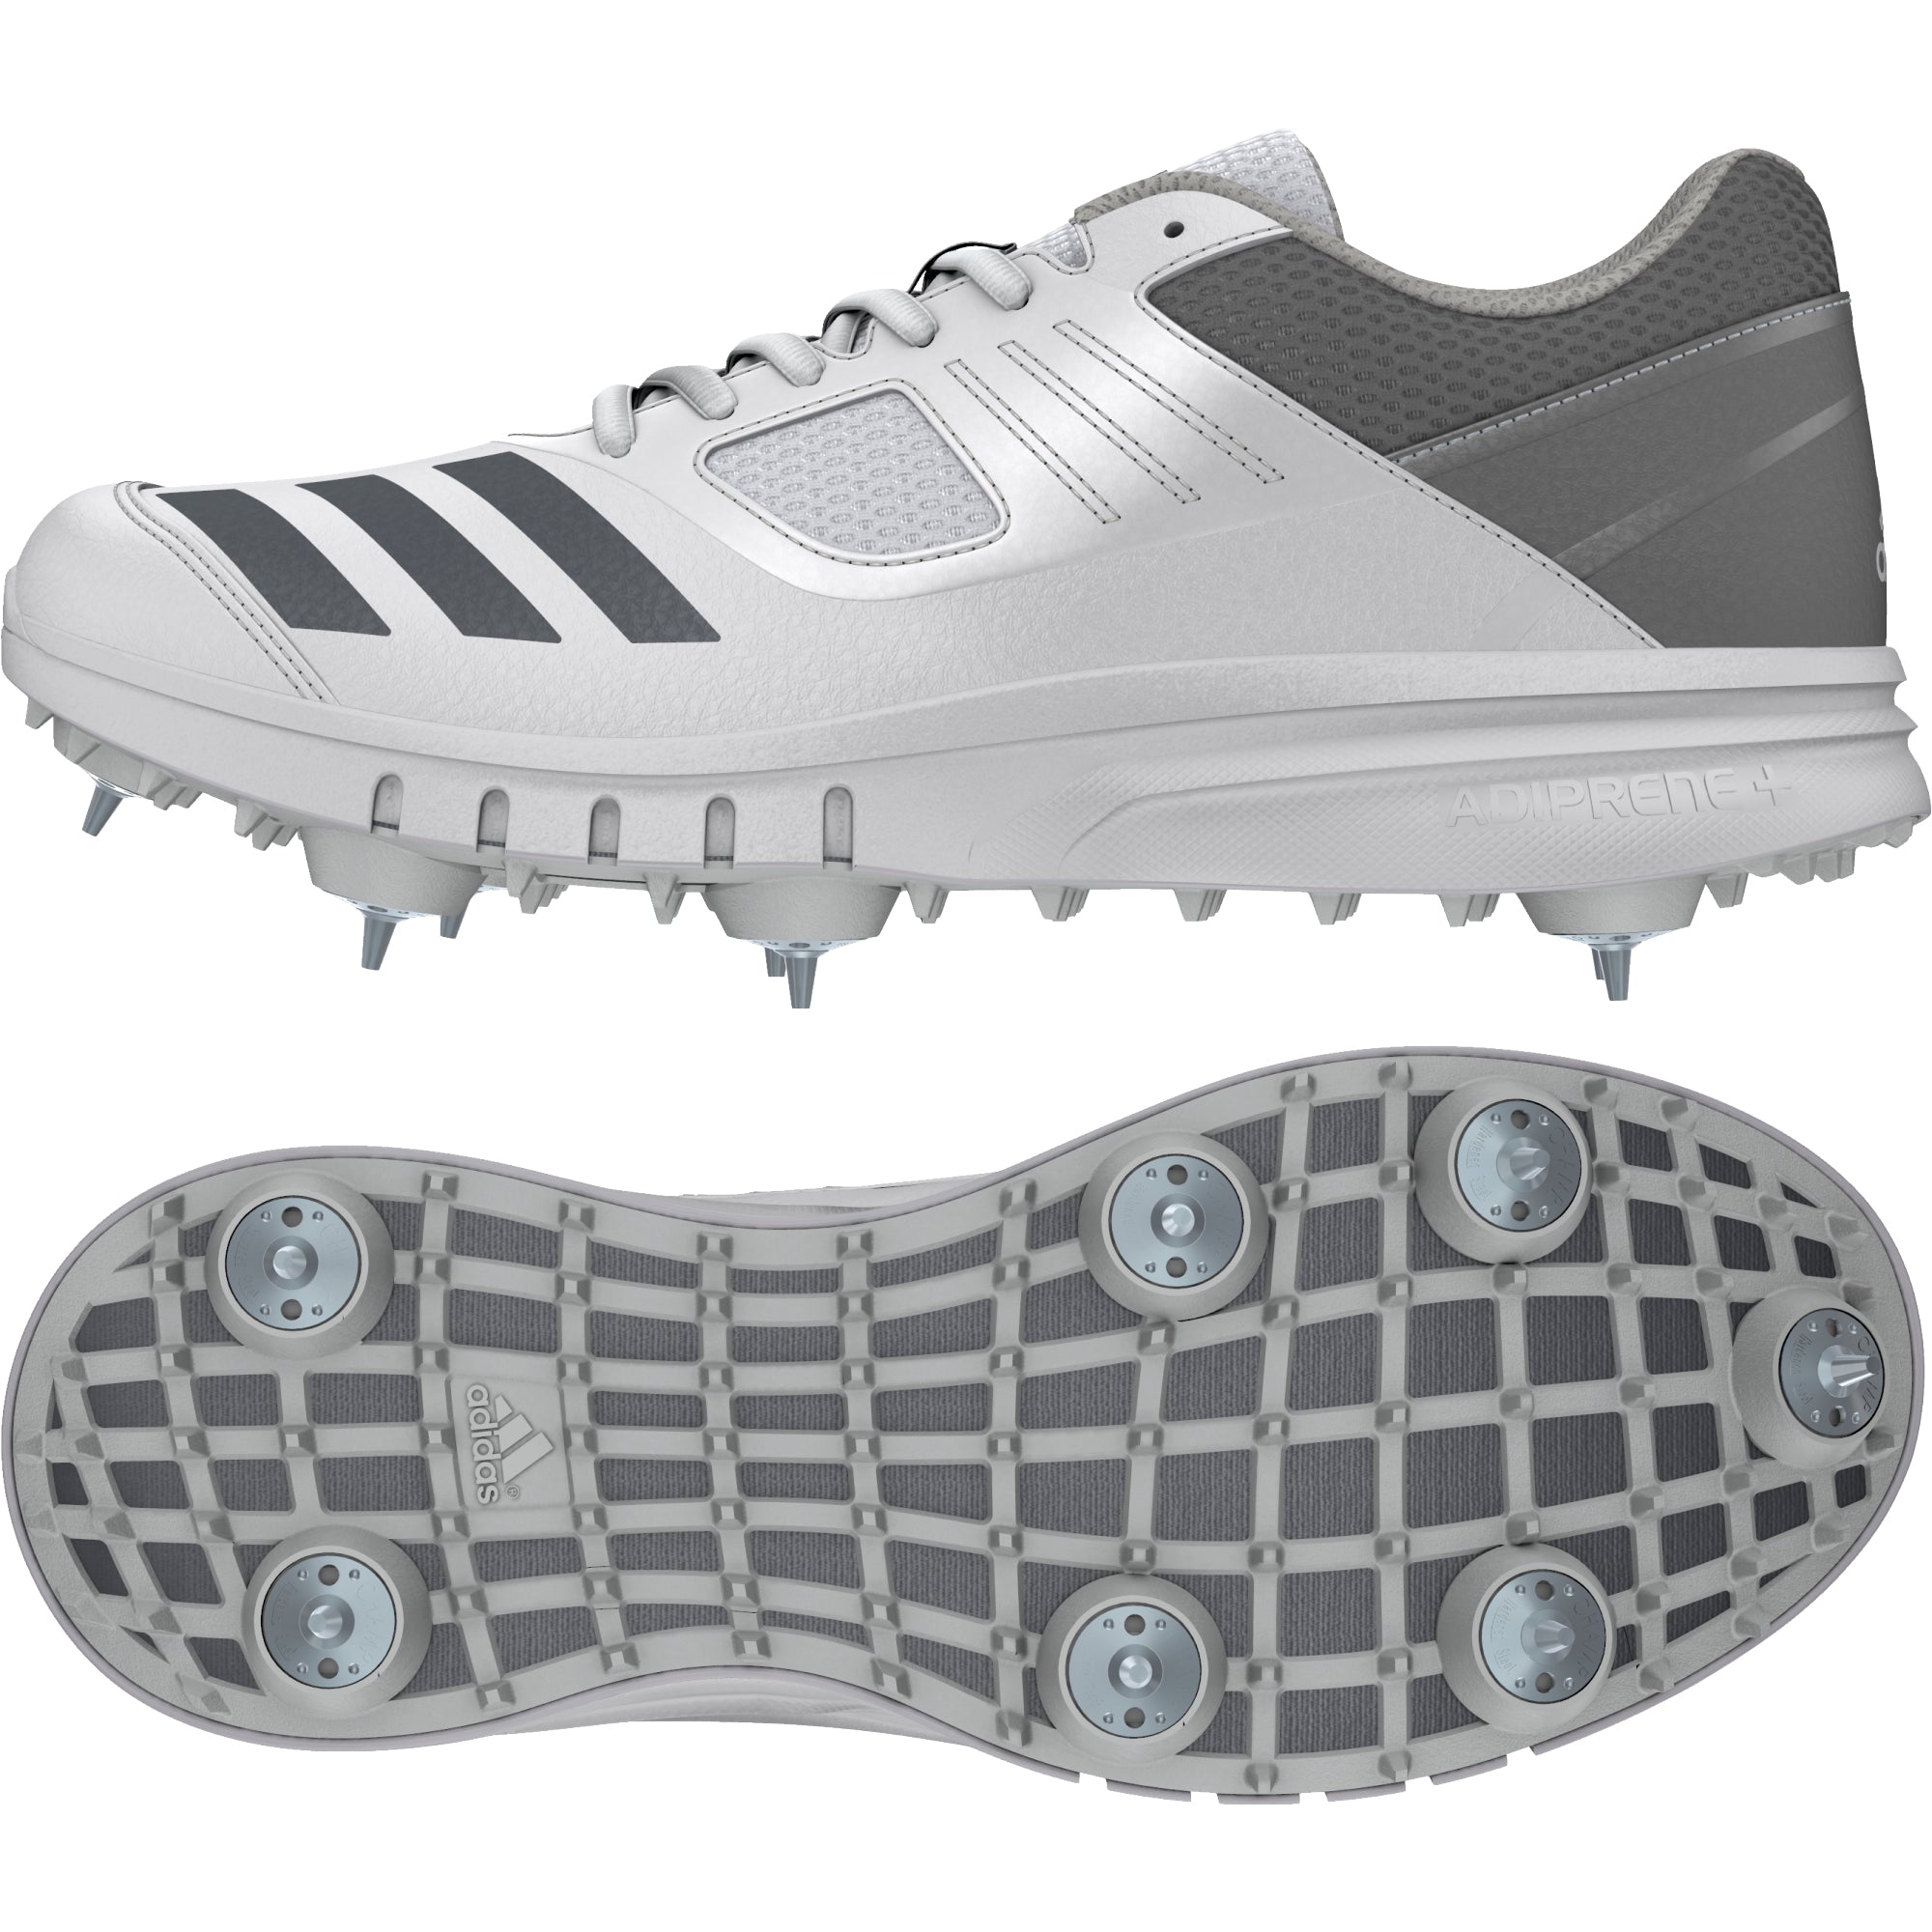 Adidas Howzat Spike 2018 Cricket Shoe 